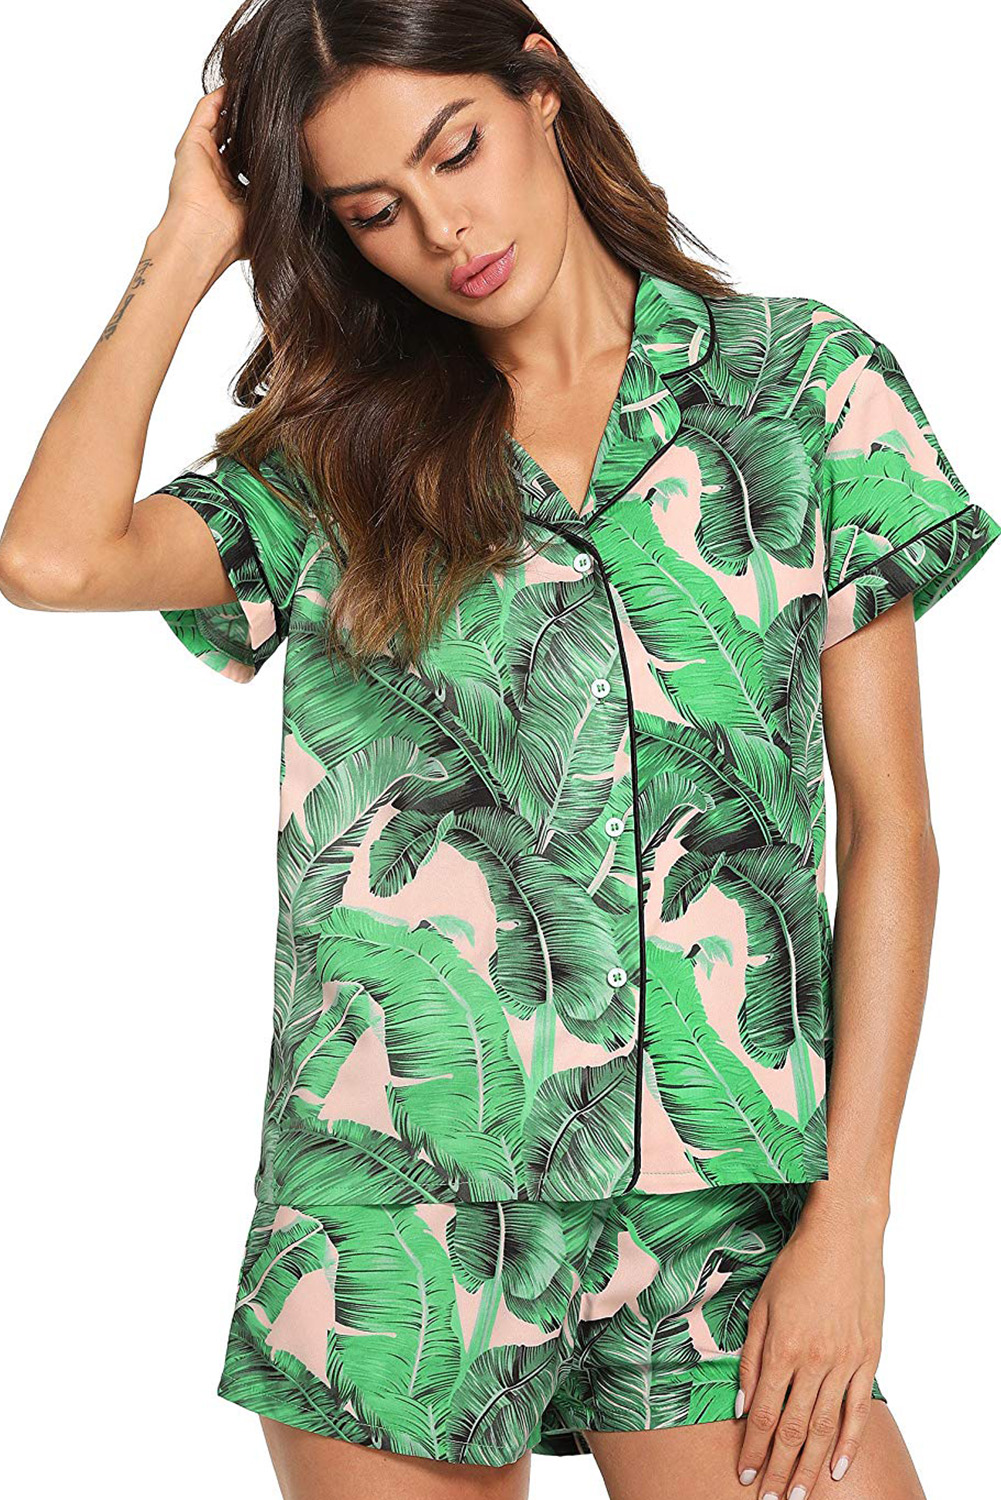 Wholesale Push it production, Cheap Green Palm Tree Print Shirt Shorts ...